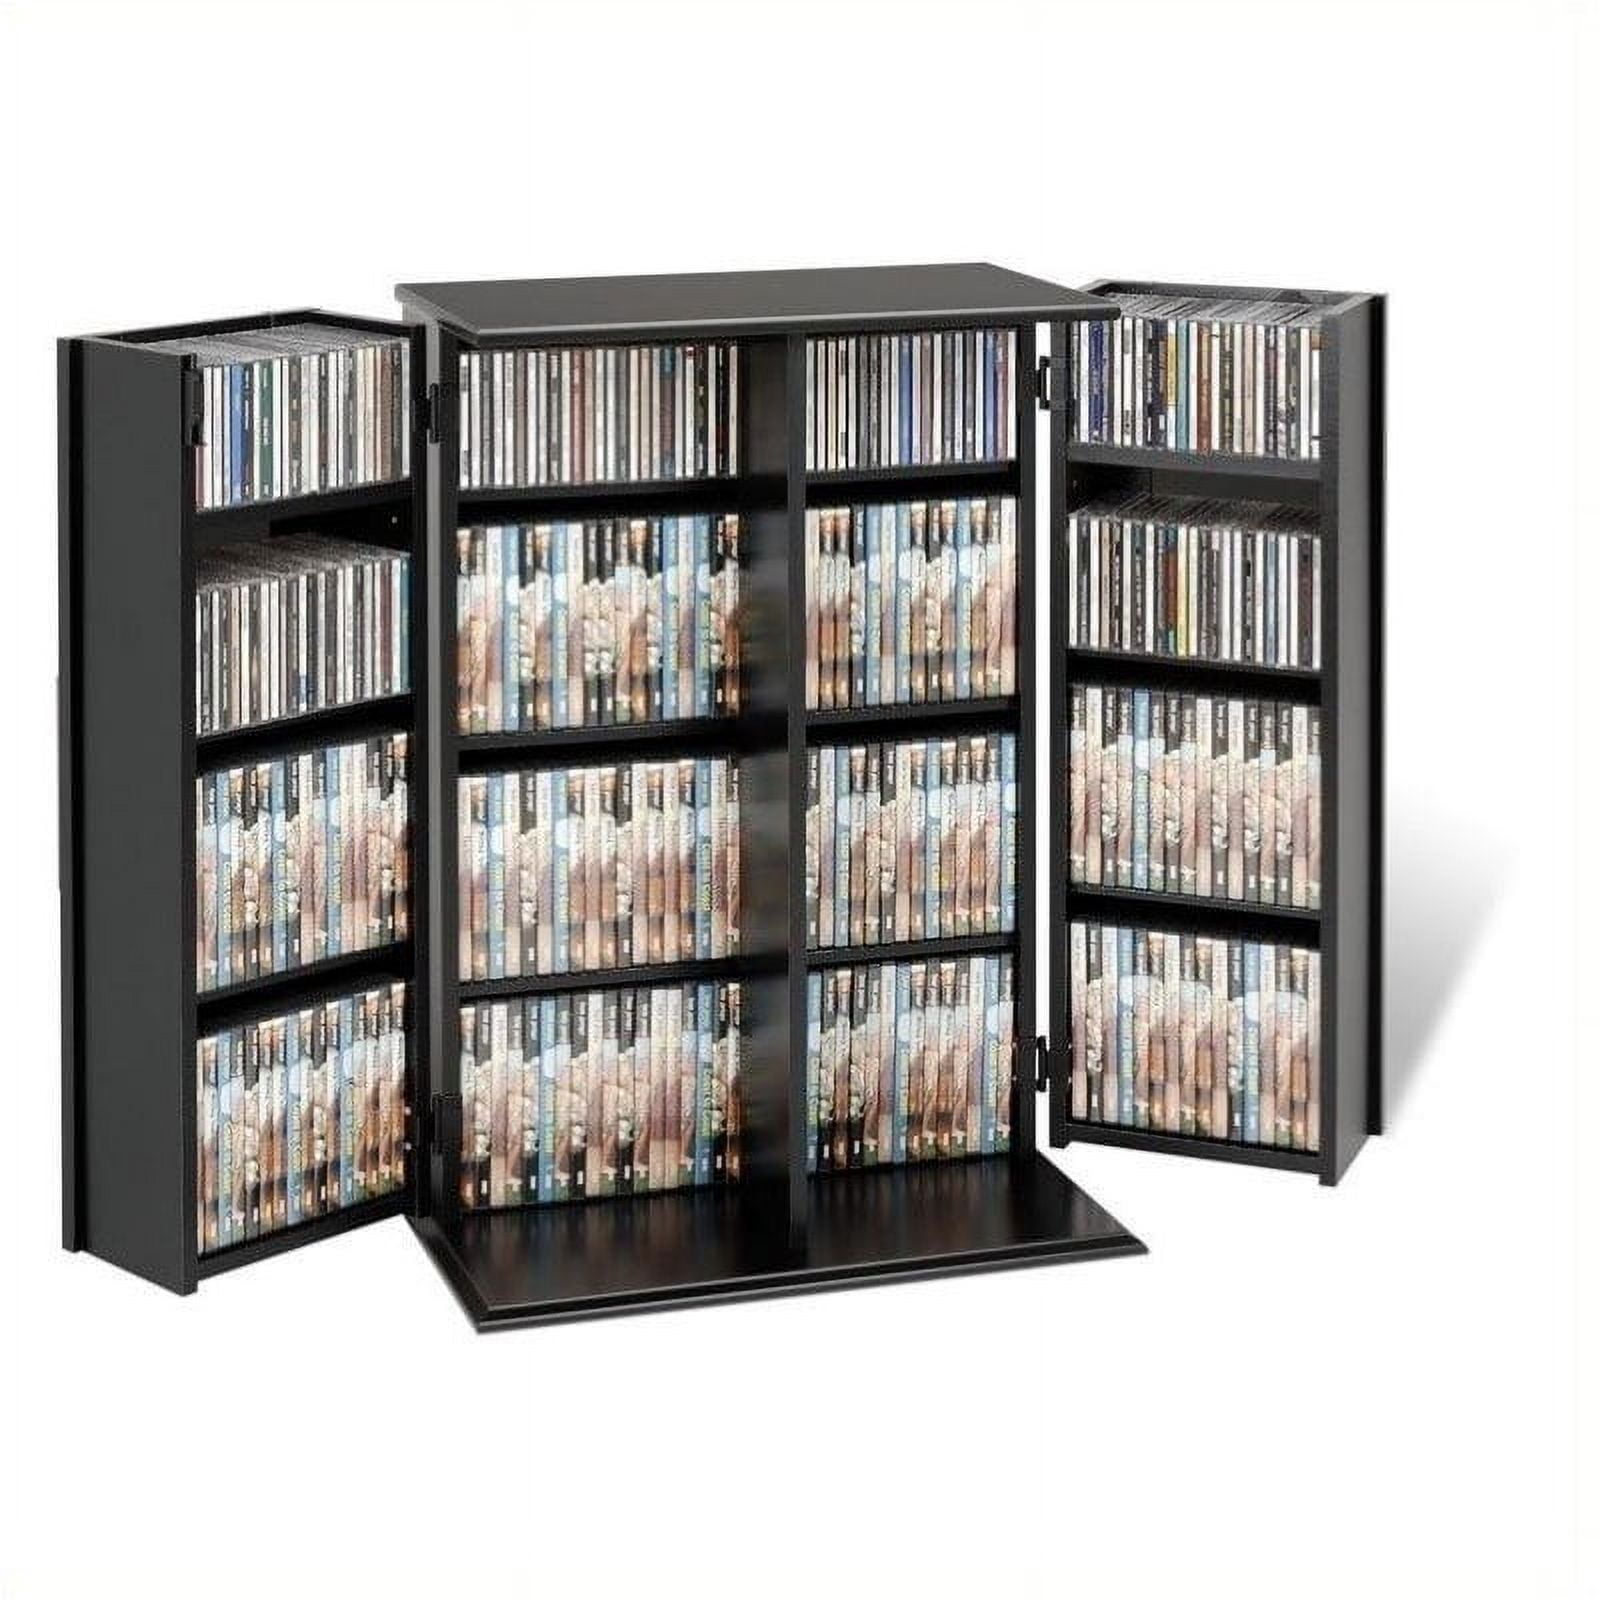 FILM CD DVD Storage Shelf for Wall, 34 Inch Cube Storage Media